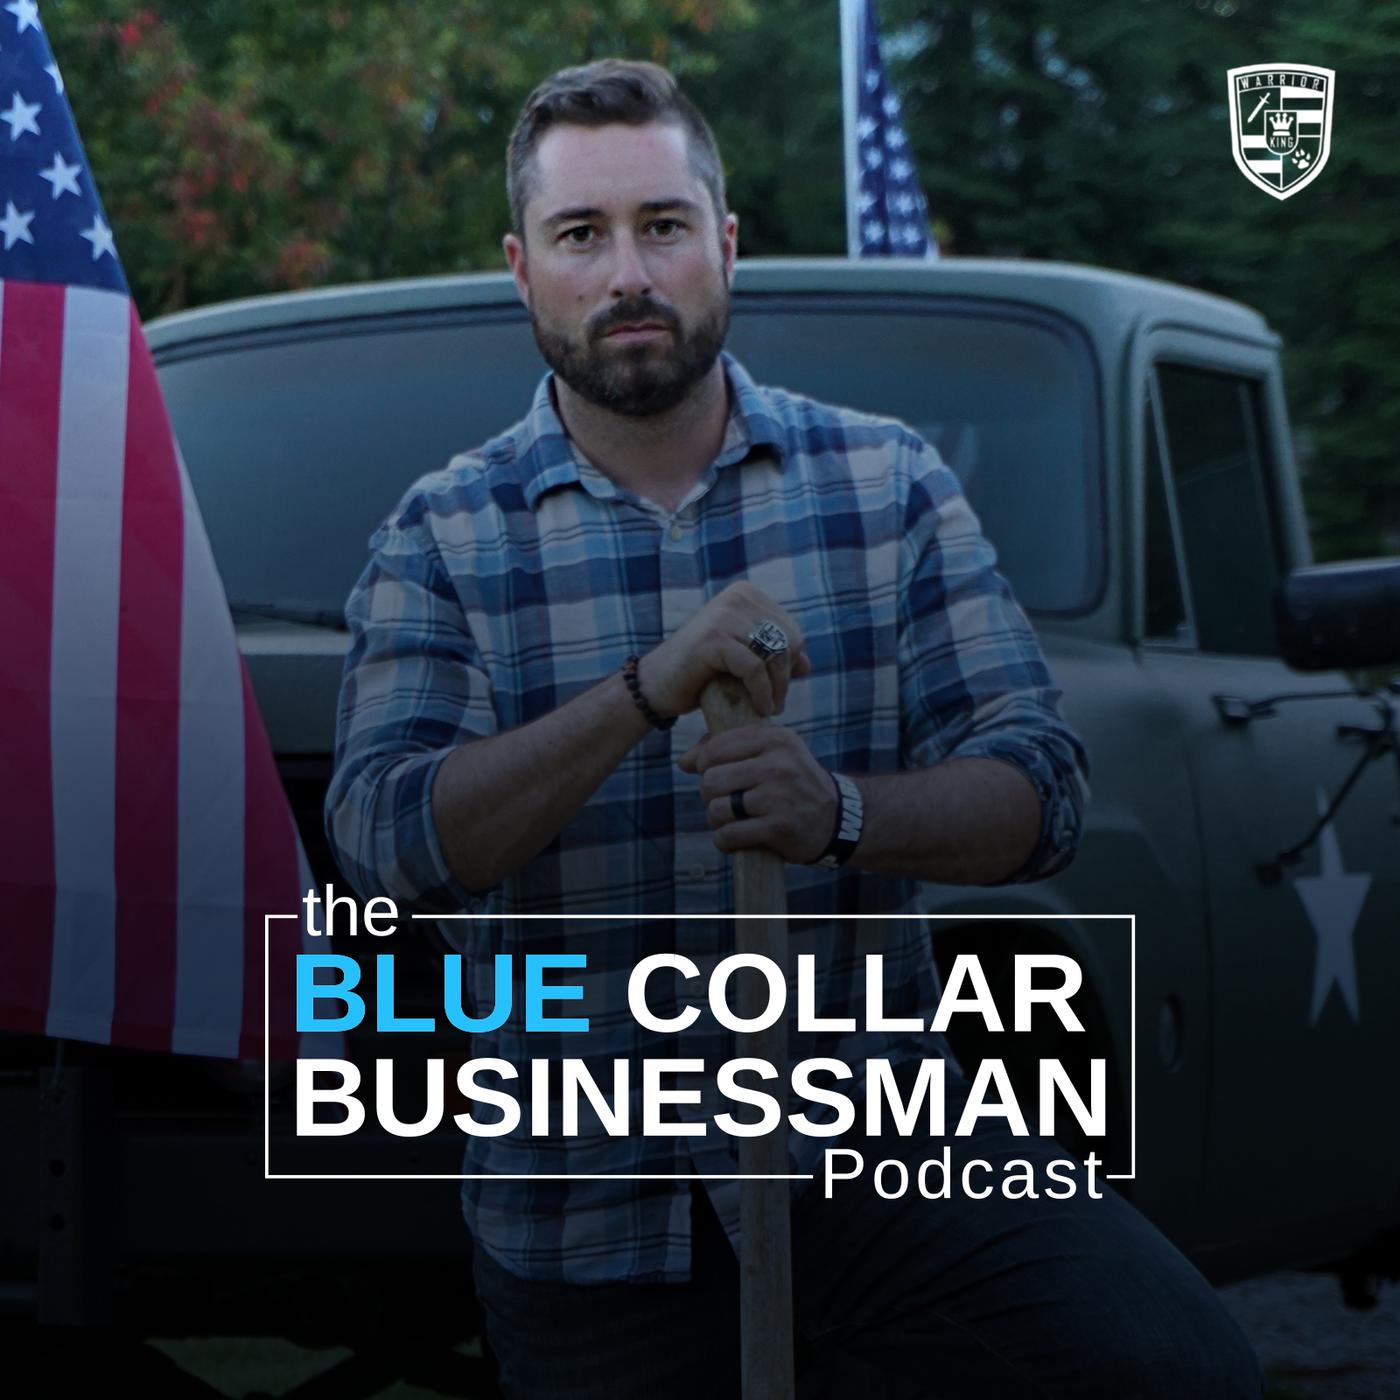 The Blue Collar Businessman